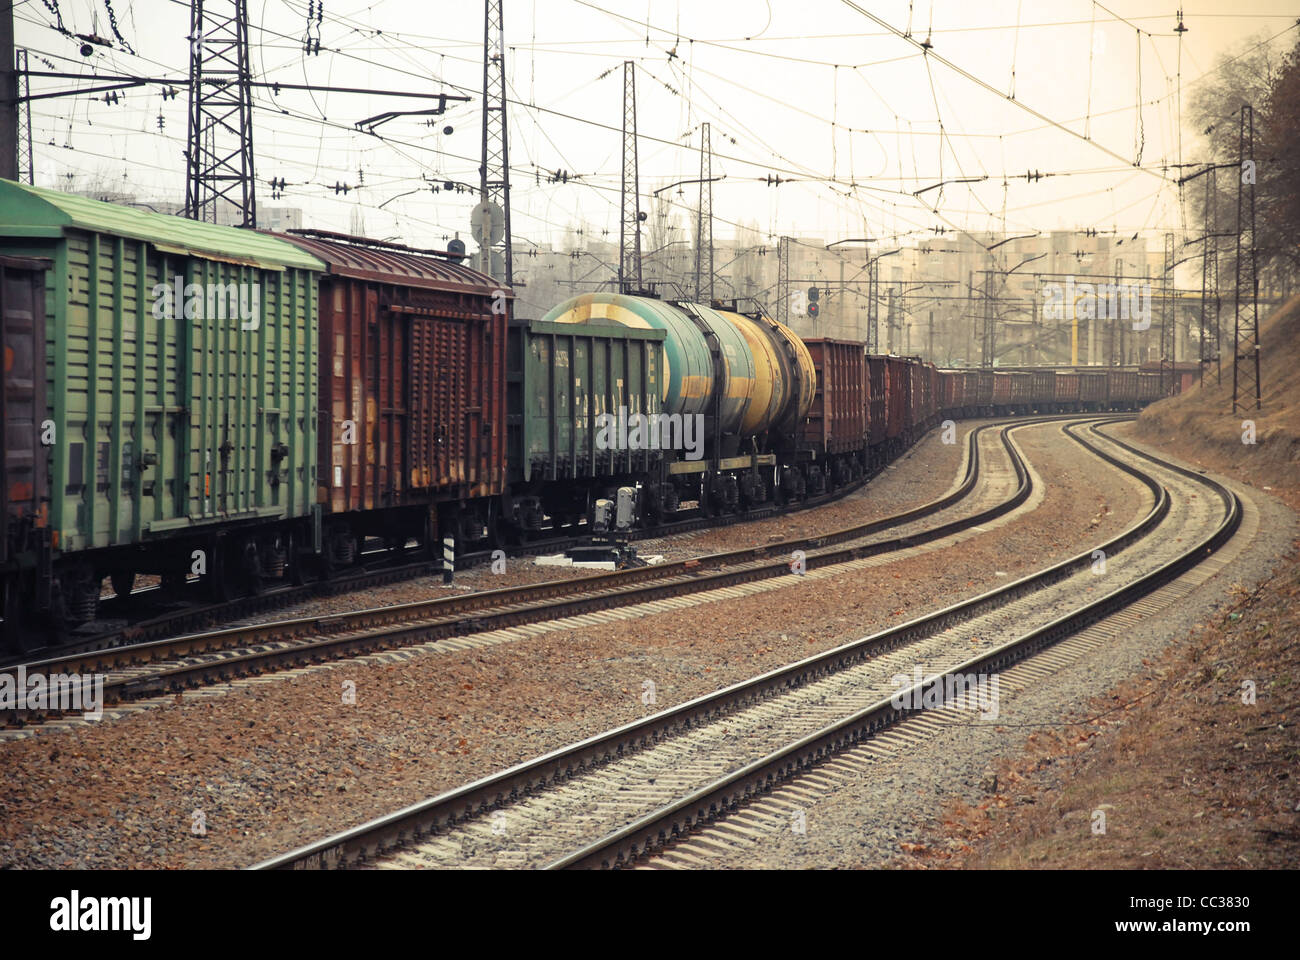 Ferrocarril en la distancia, bobinado de acero, transporte, viajes Foto de stock